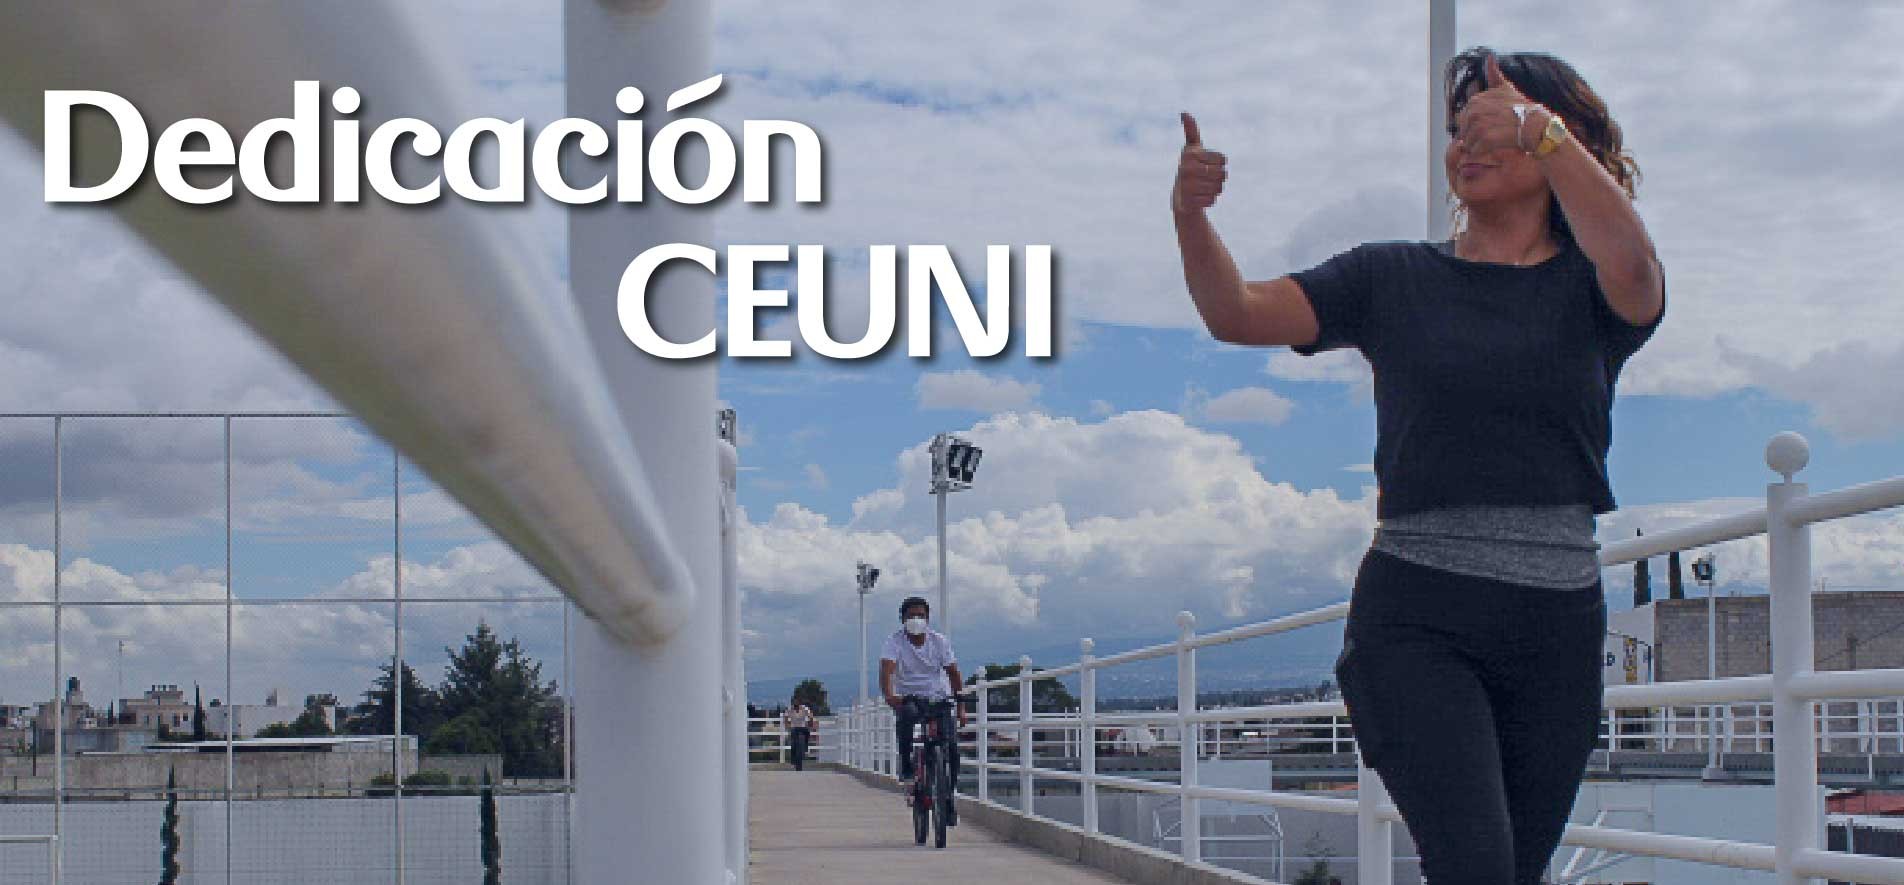 CEUNI_dedicacion_l